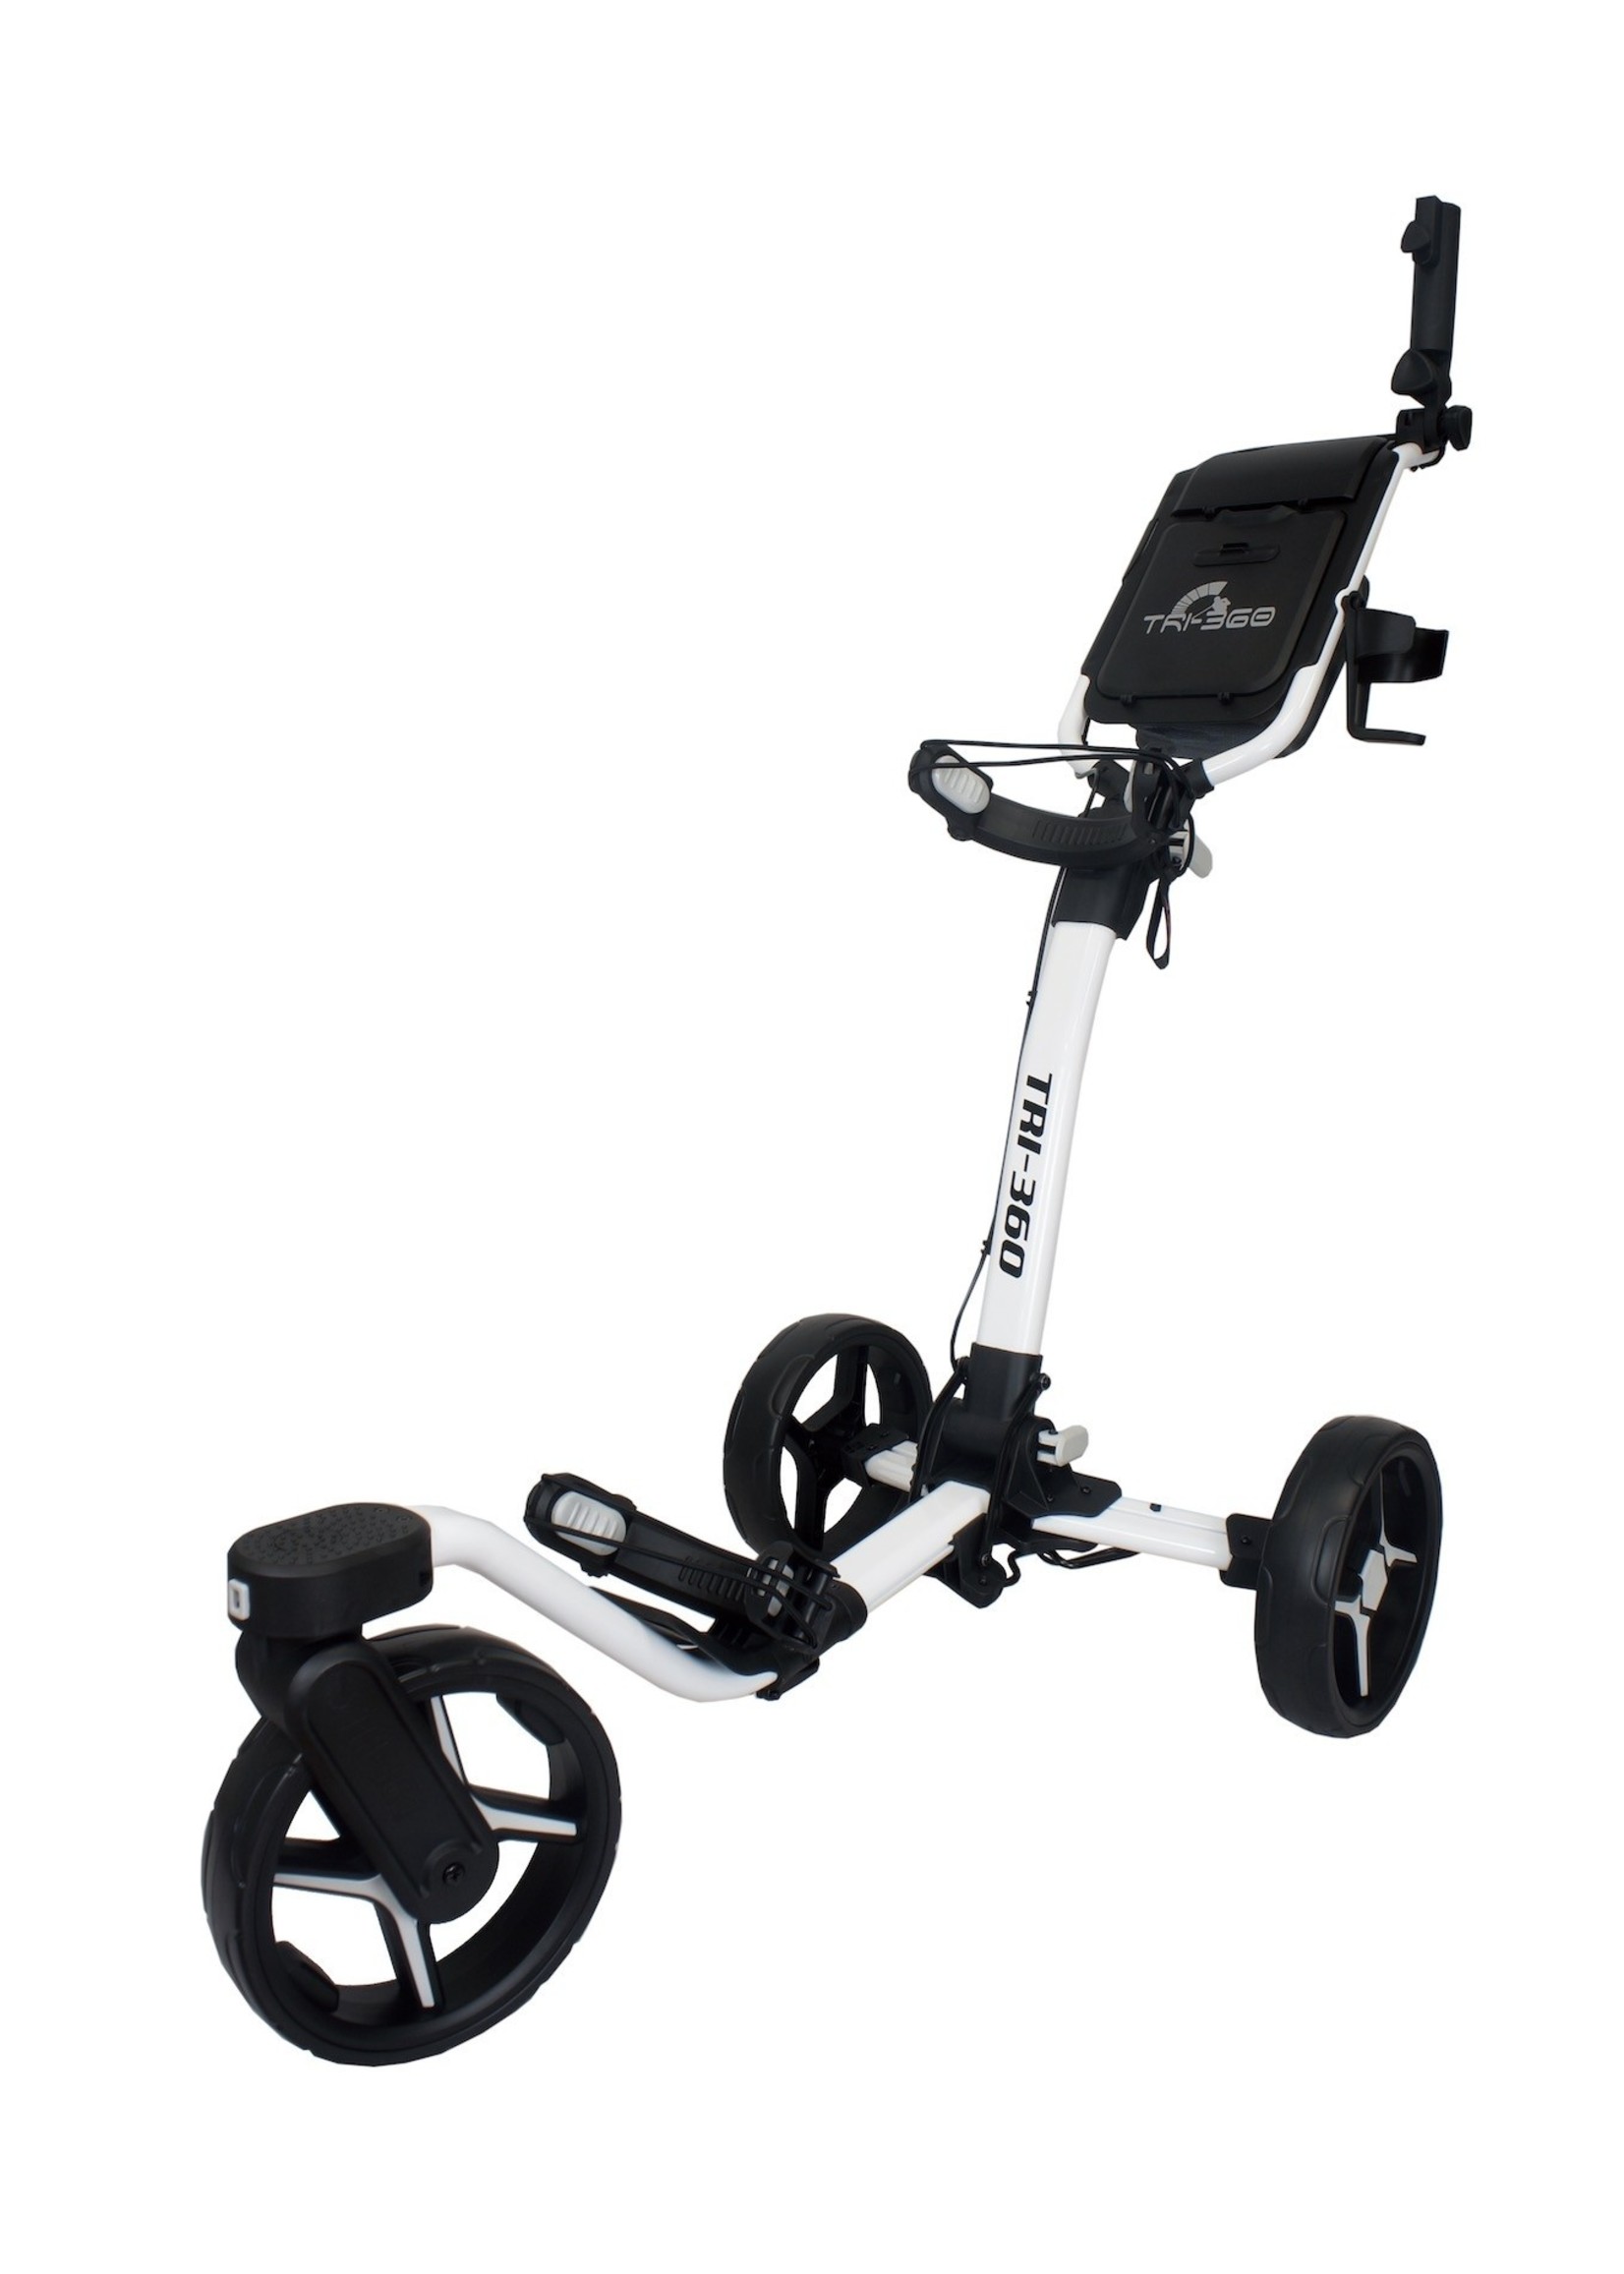 AXGLO TRI-360 Golf Push Cart